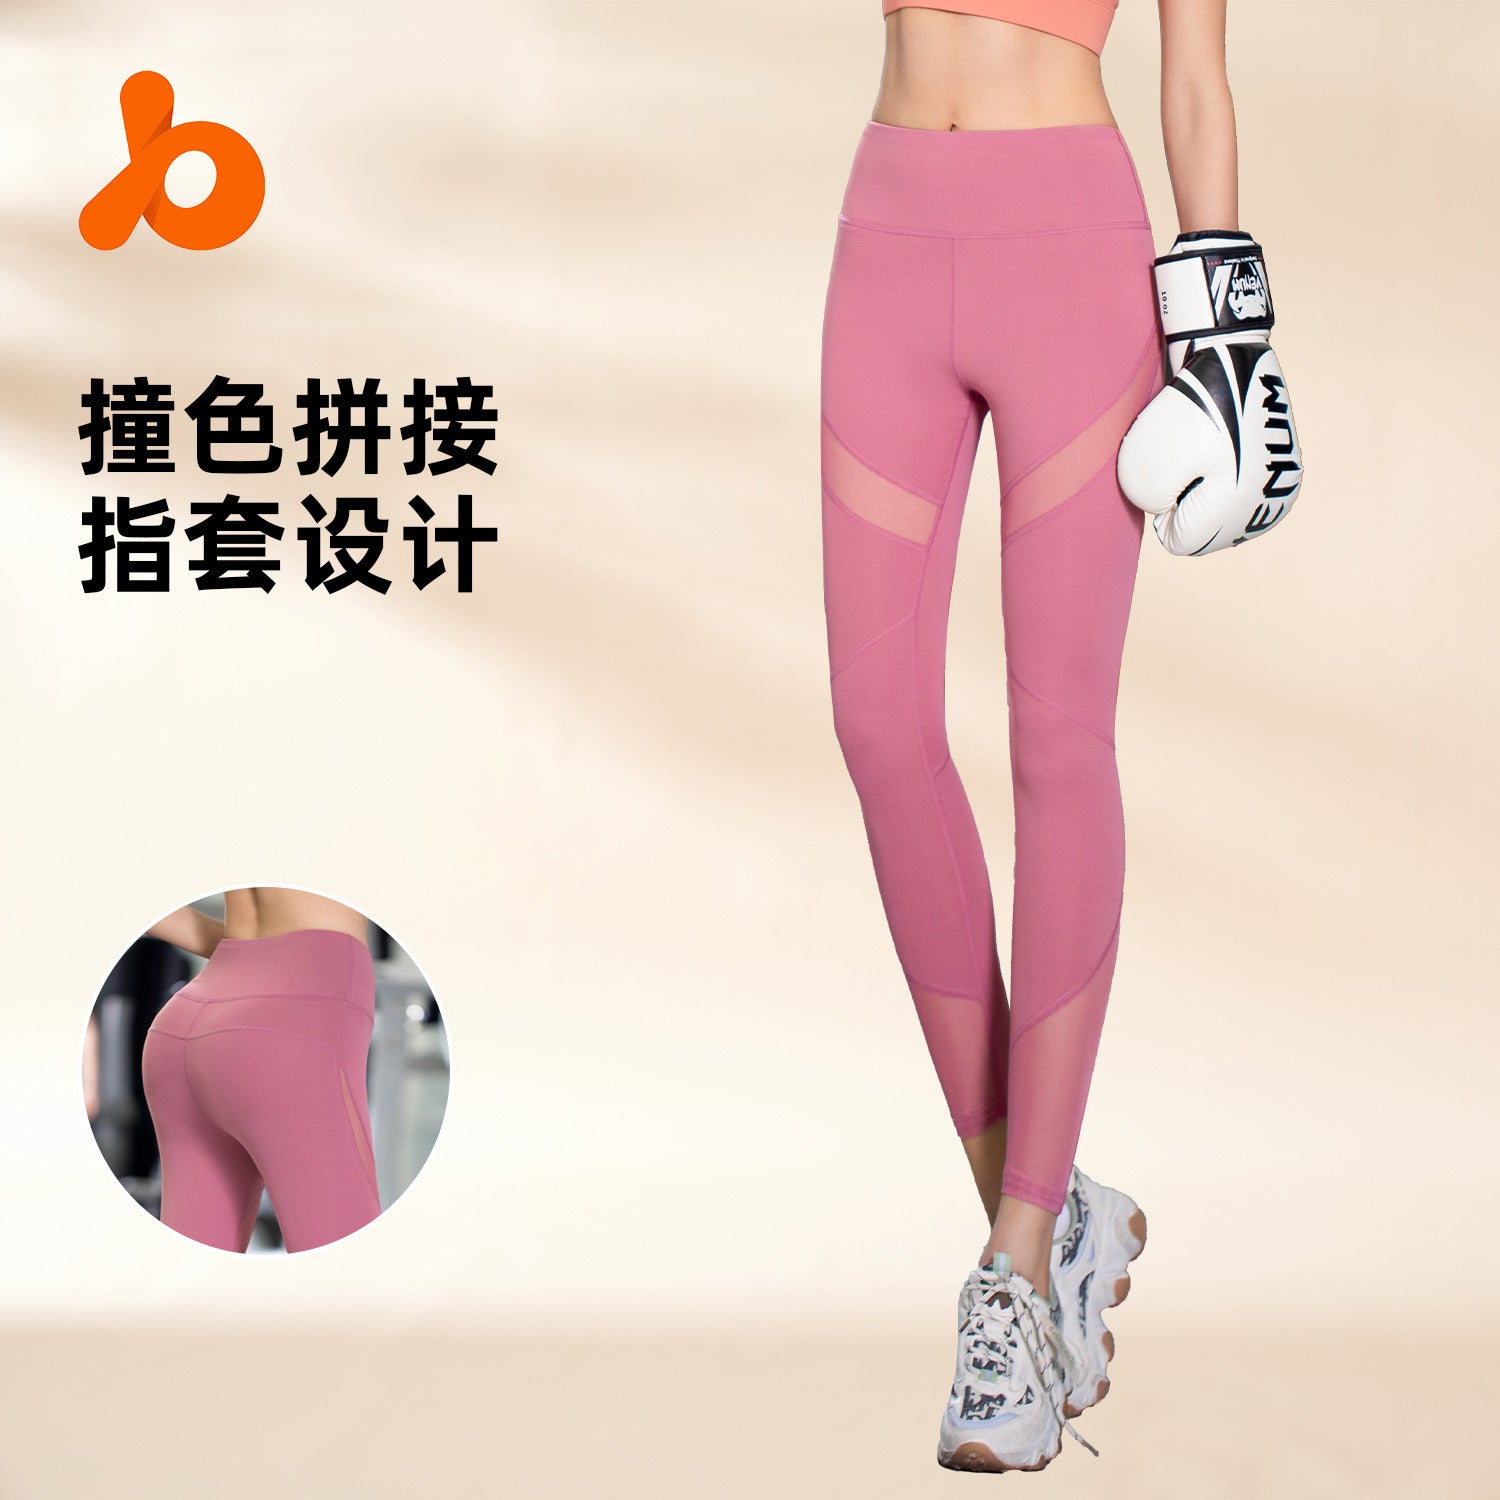 Juyitang peach yoga pants women's high waist stretch mesh stitching sports leggings hip lift fitness pants women